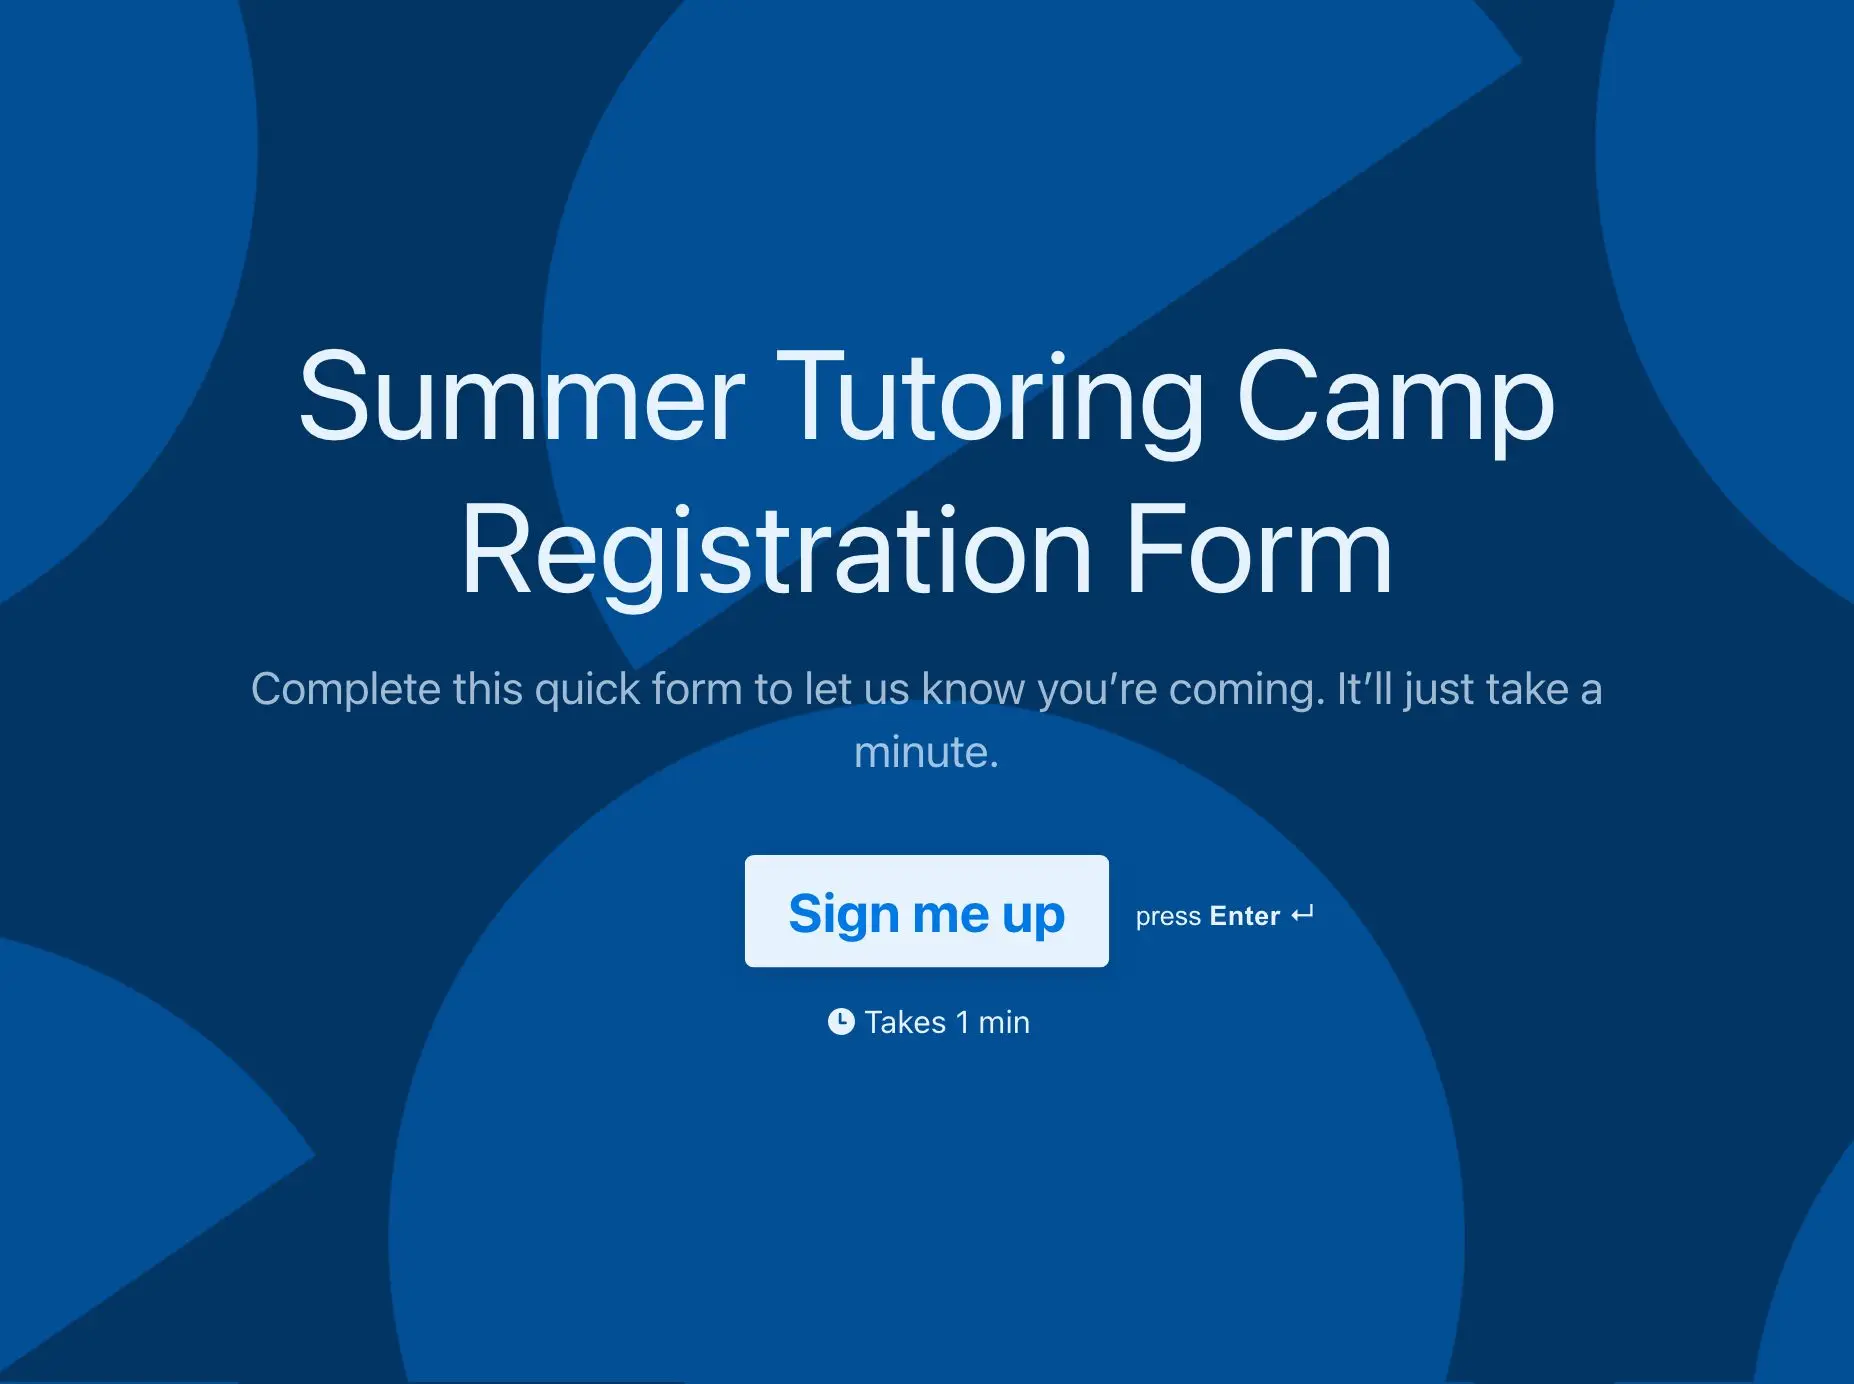 Summer Tutoring Camp Registration Form Template Hero